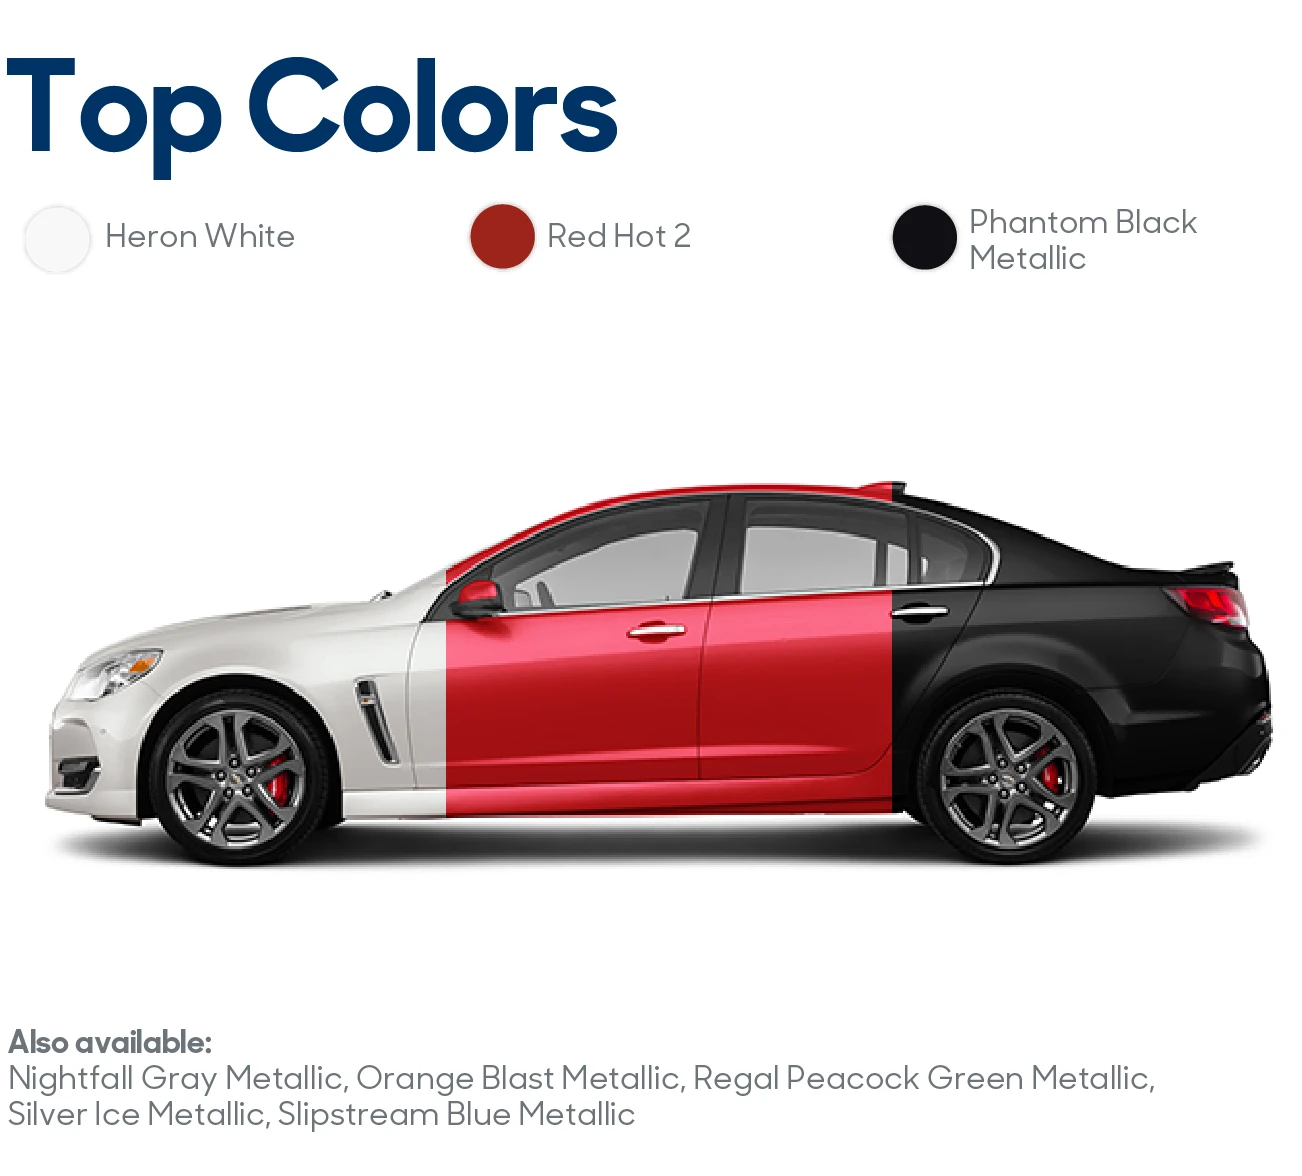 2017 Chevrolet SS Review: Top Colors | CarMax